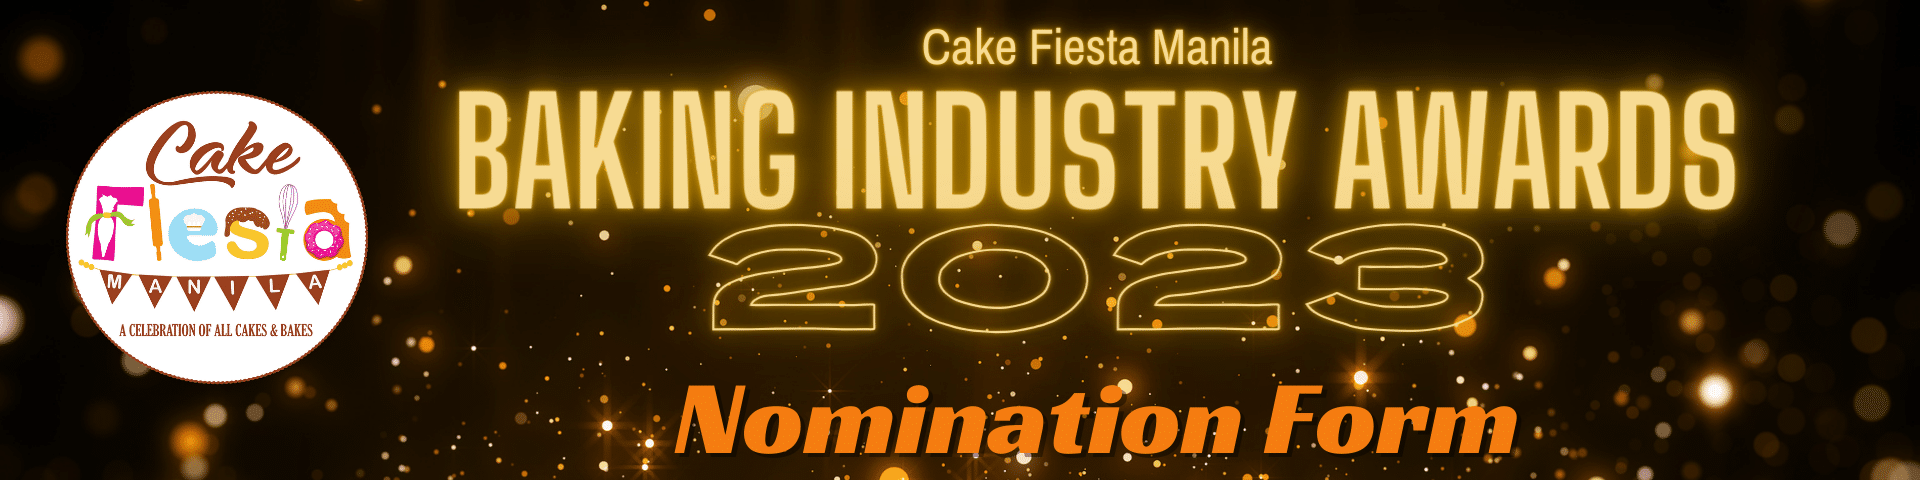 CFM Baking industry awards